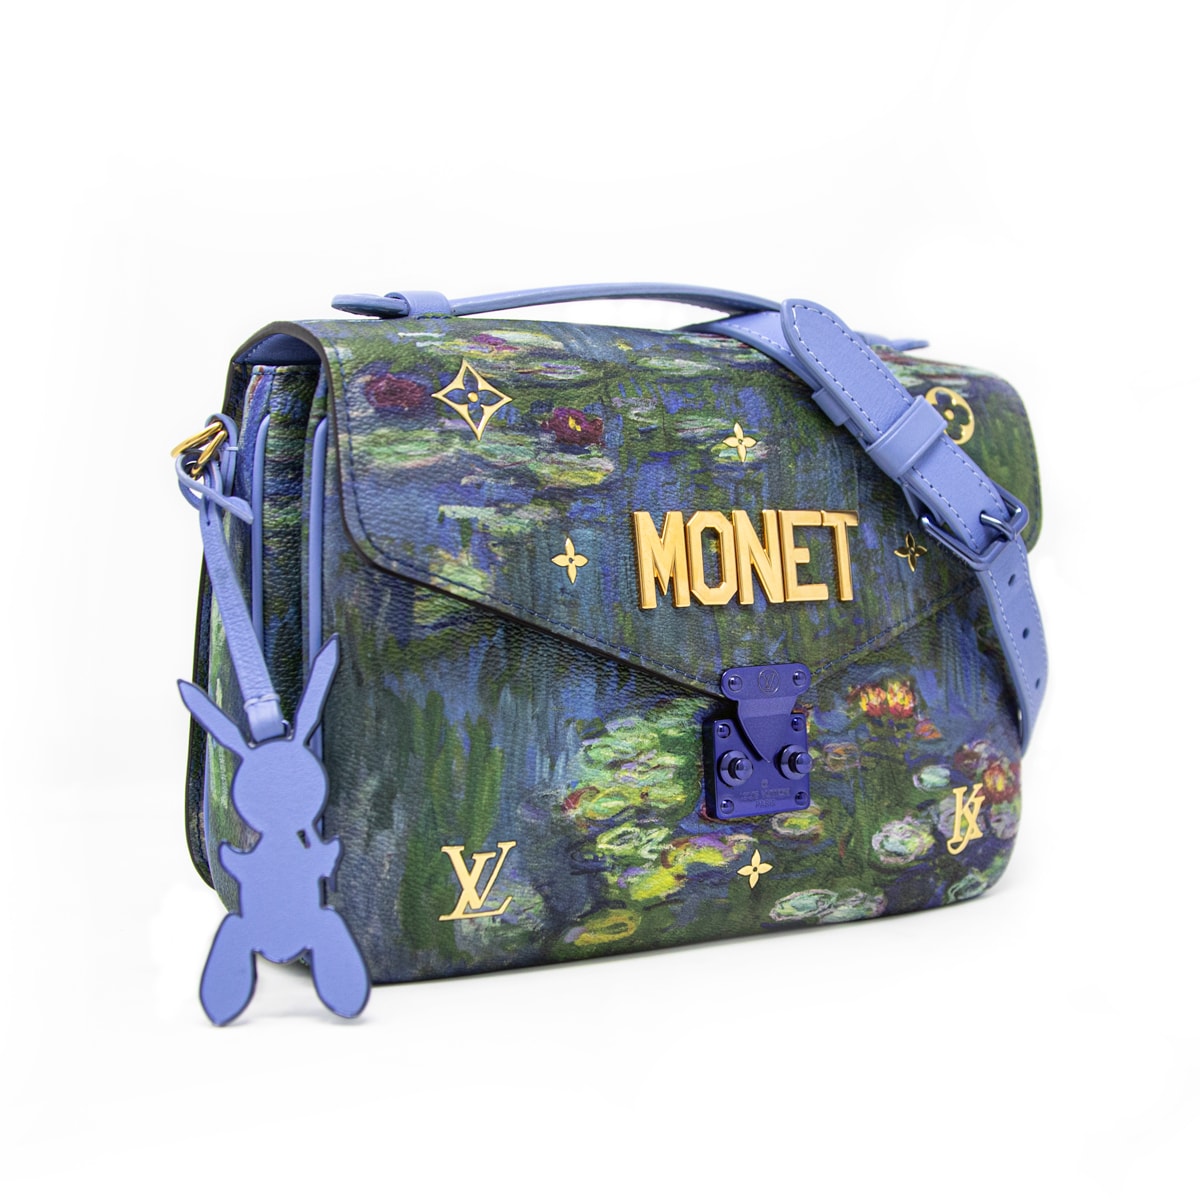 Louis Vuitton x Jeff Koons Monet bag